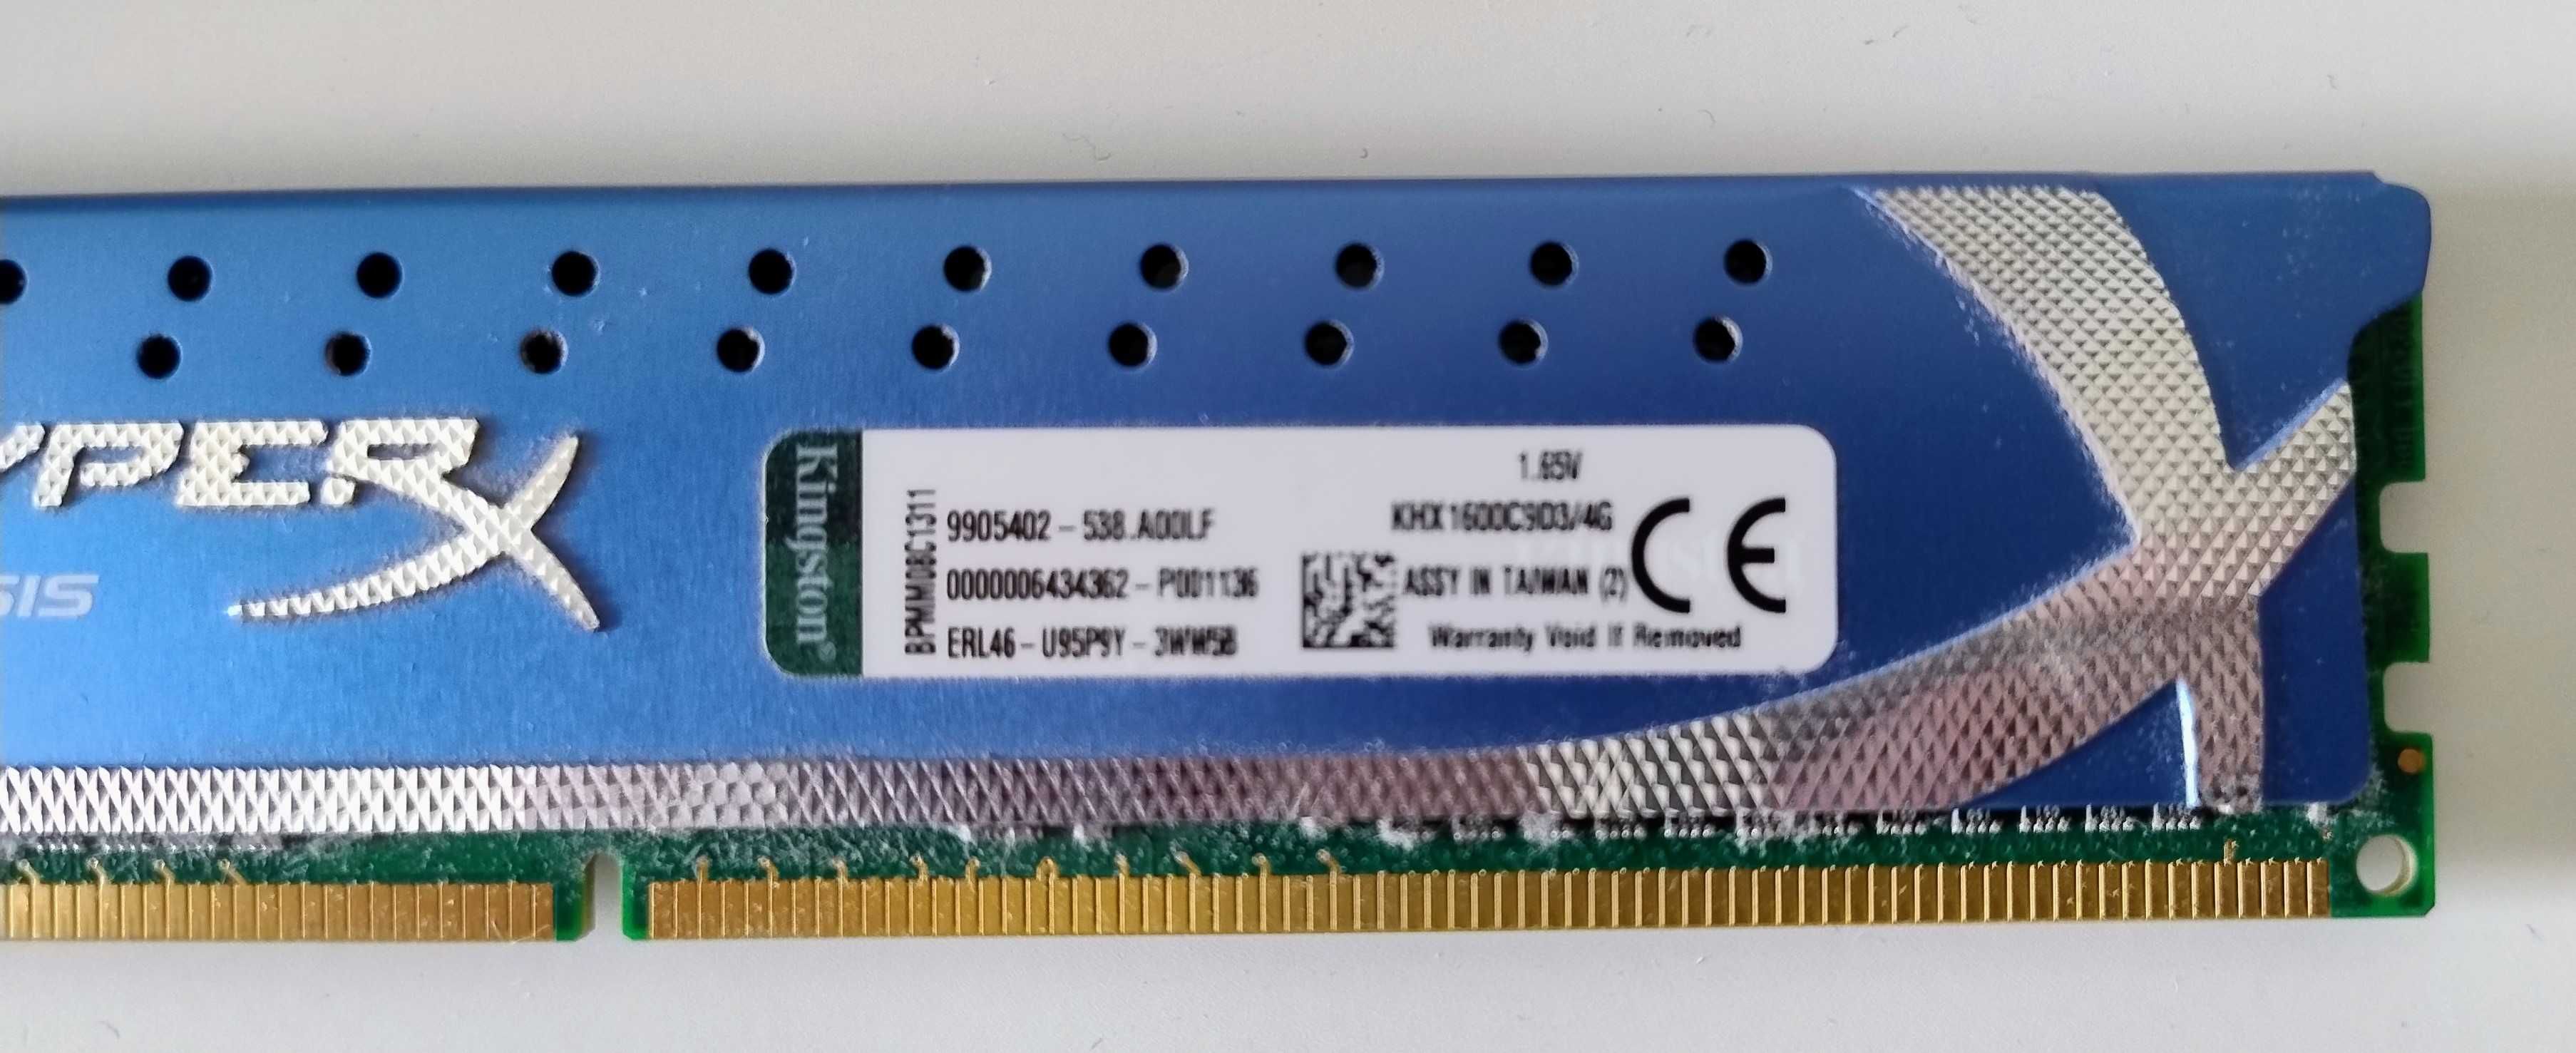 Kingston HyperX Genesis 4GB 1600MHz KHX1600C9D3